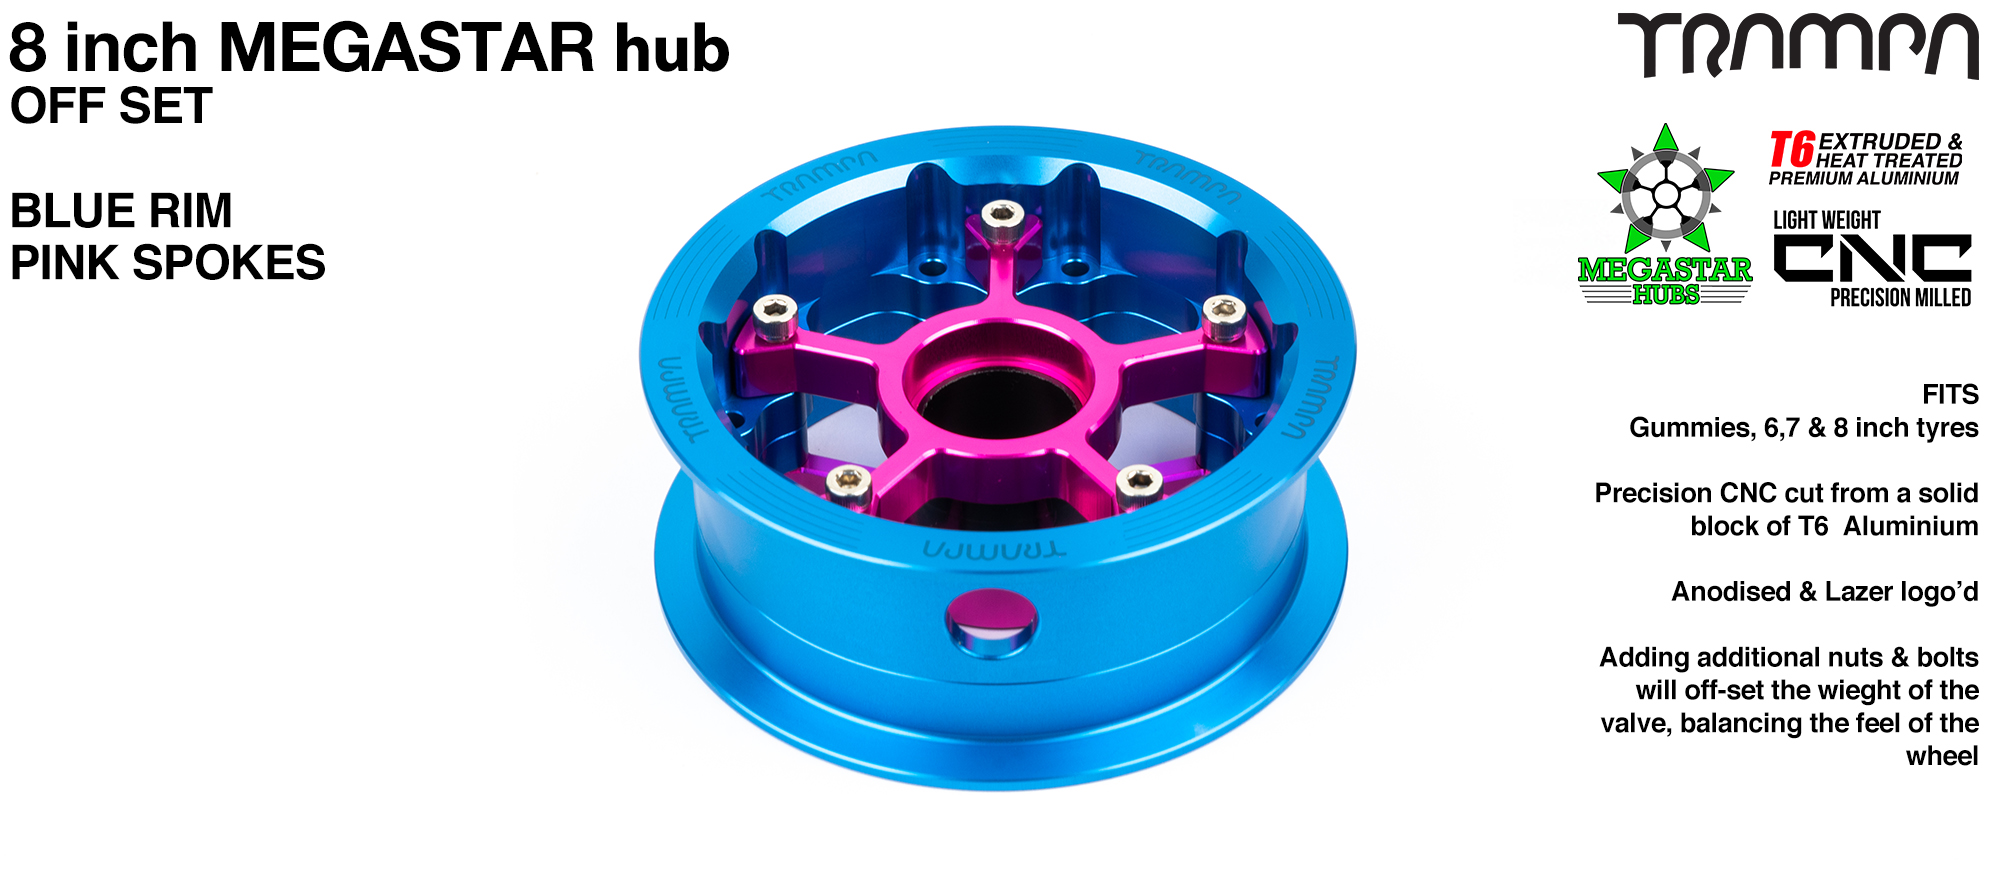 8 Inch OFF-SET MEGASTAR Hub - BLUE Rim with pink Spokes 